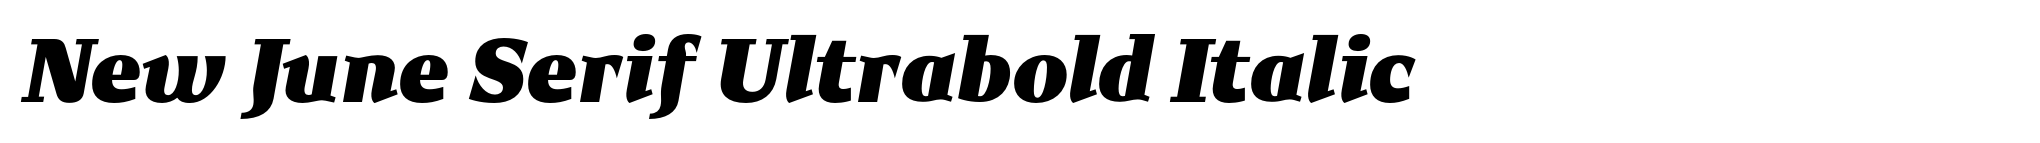 New June Serif Ultrabold Italic image